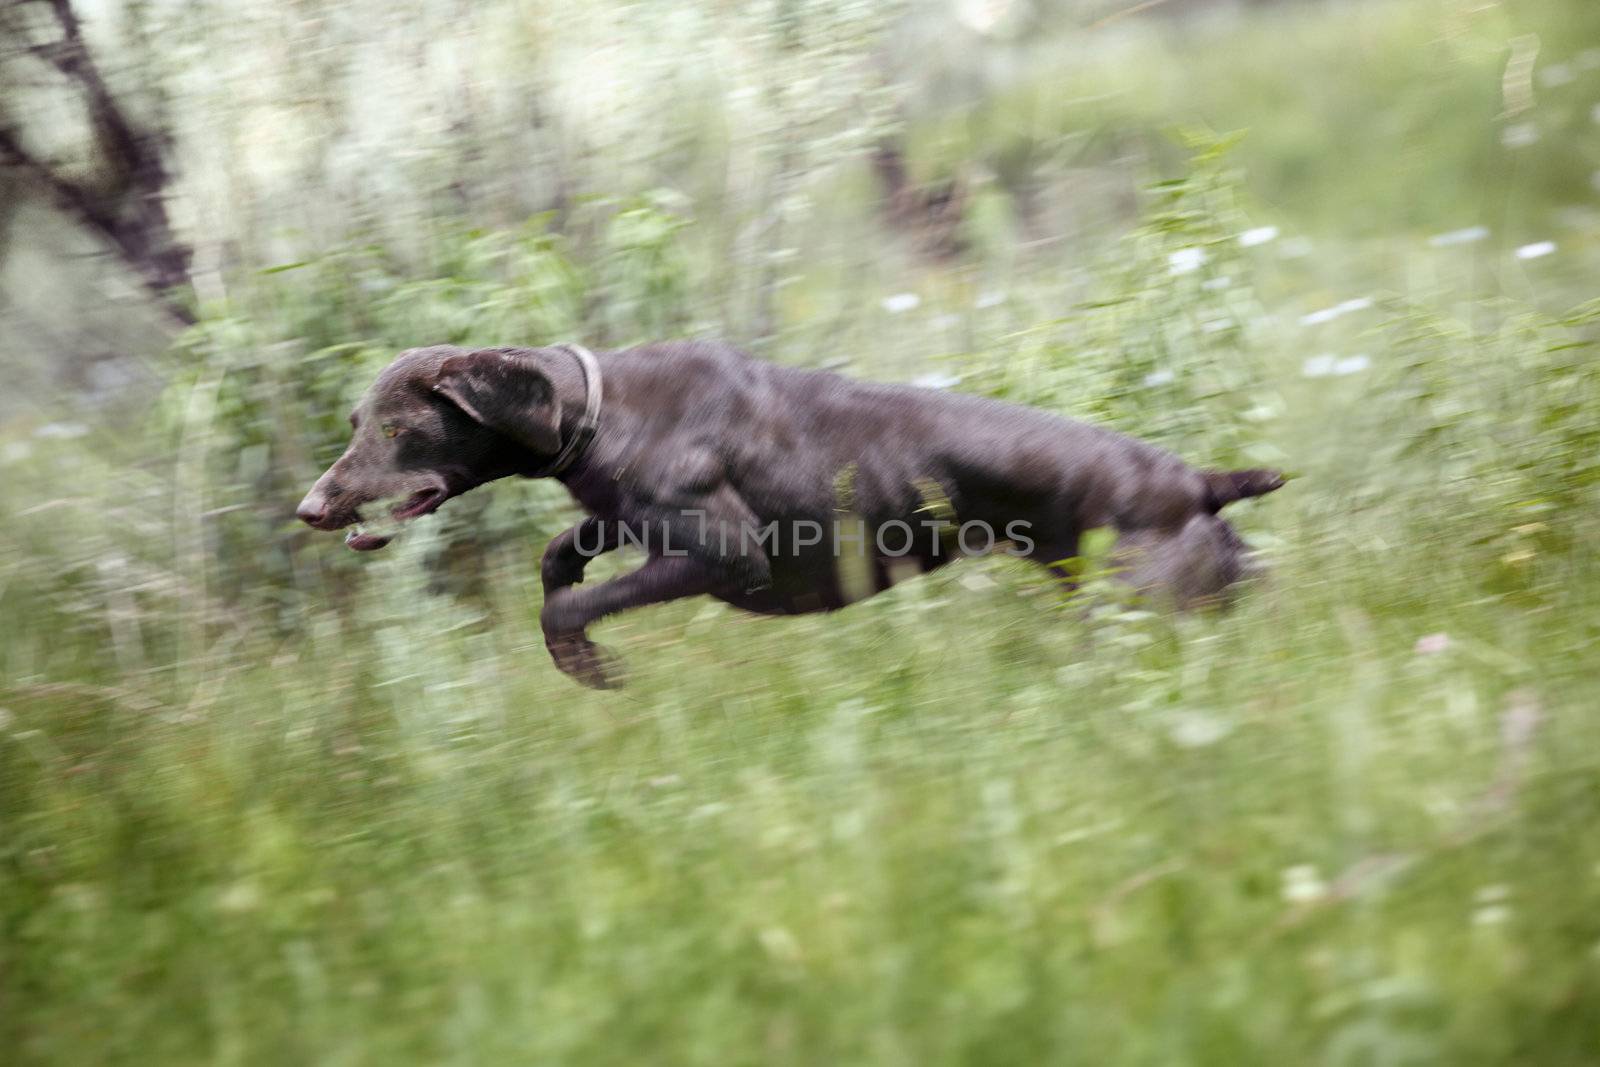 Jumping dog by Novic